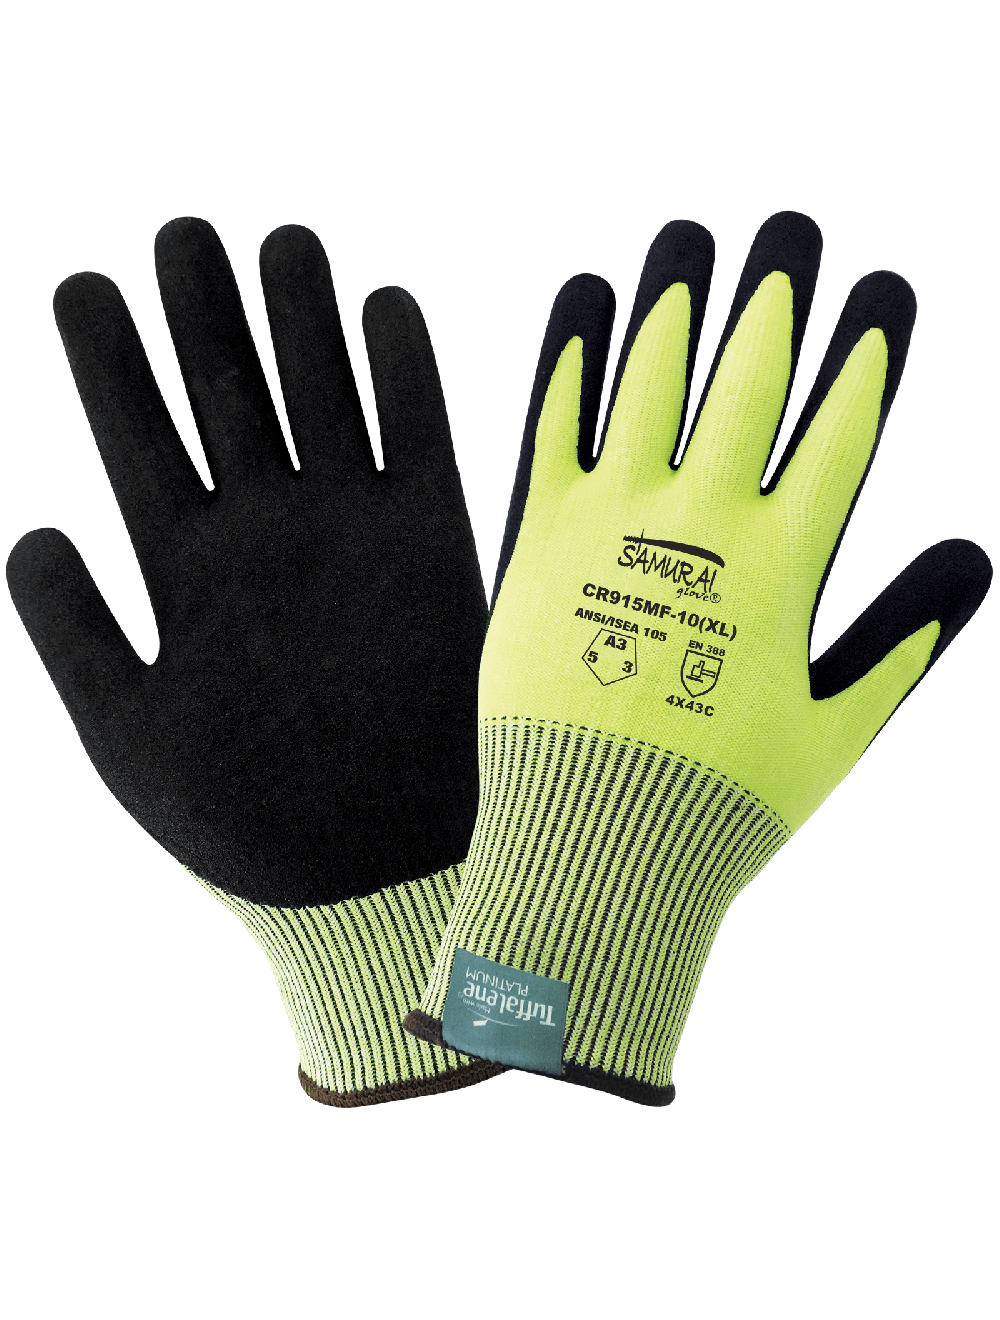 Samurai Glove - Cut Resistant Gloves Made With Tuffalene Pla